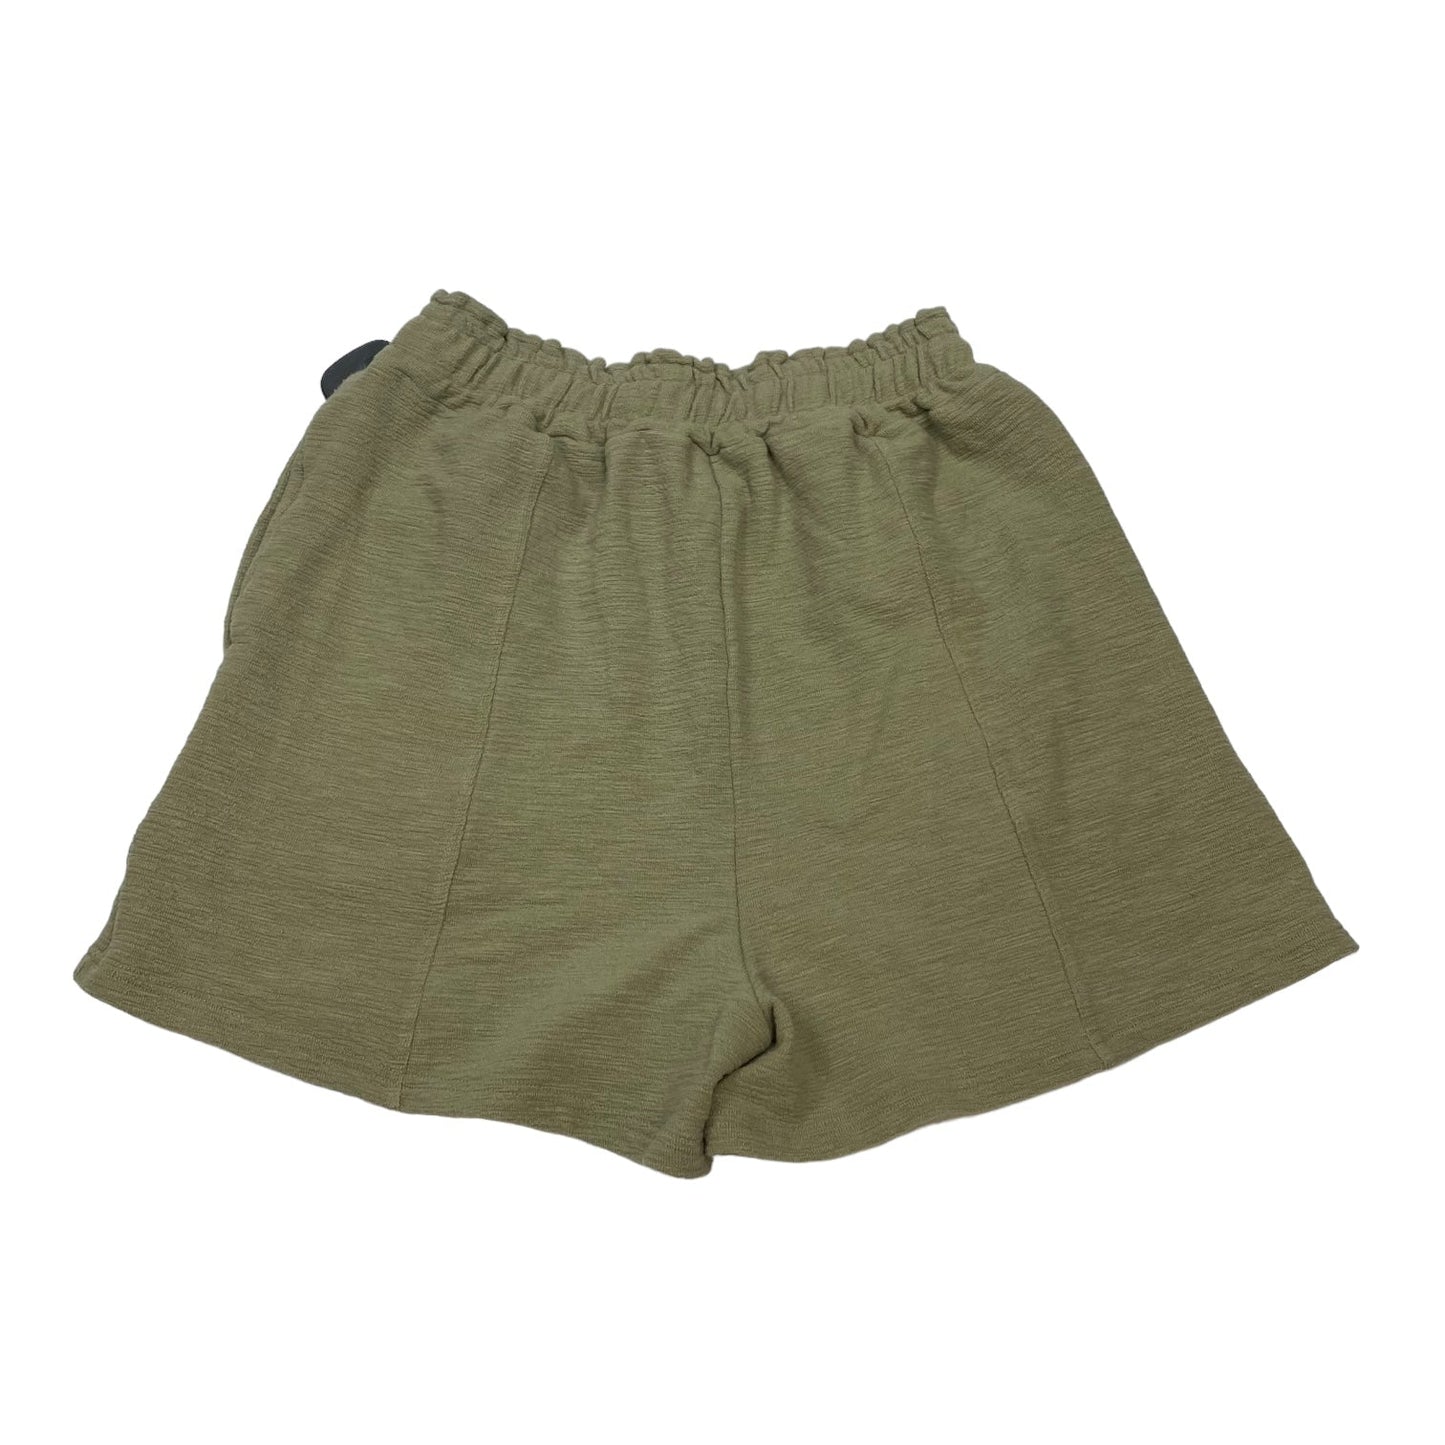 Green Shorts Very J, Size L